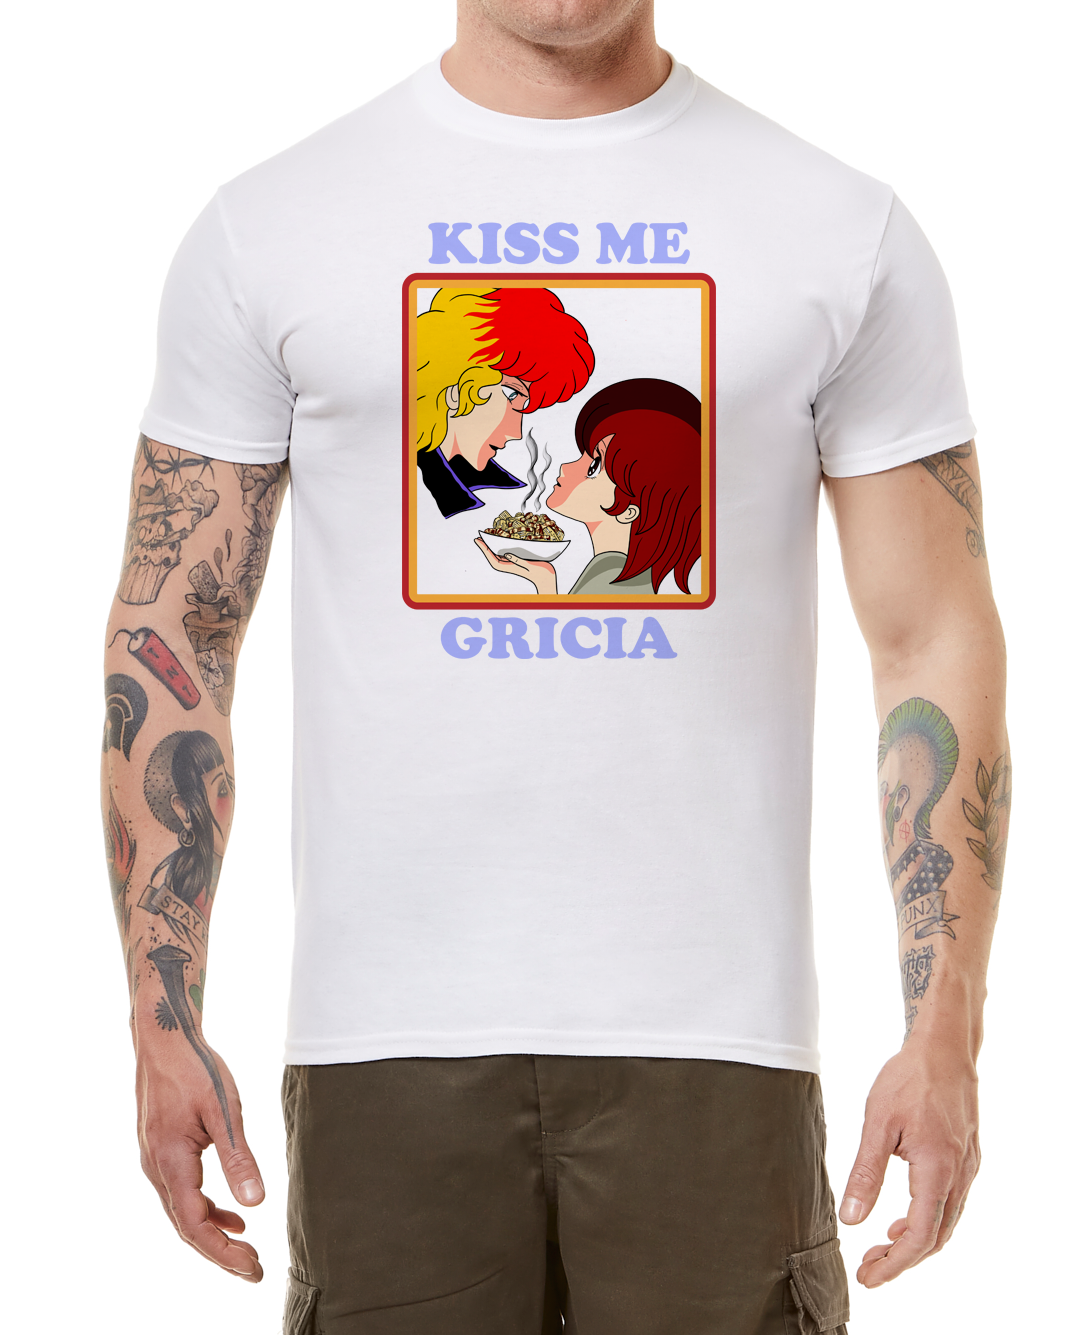 Kiss me Gricia white